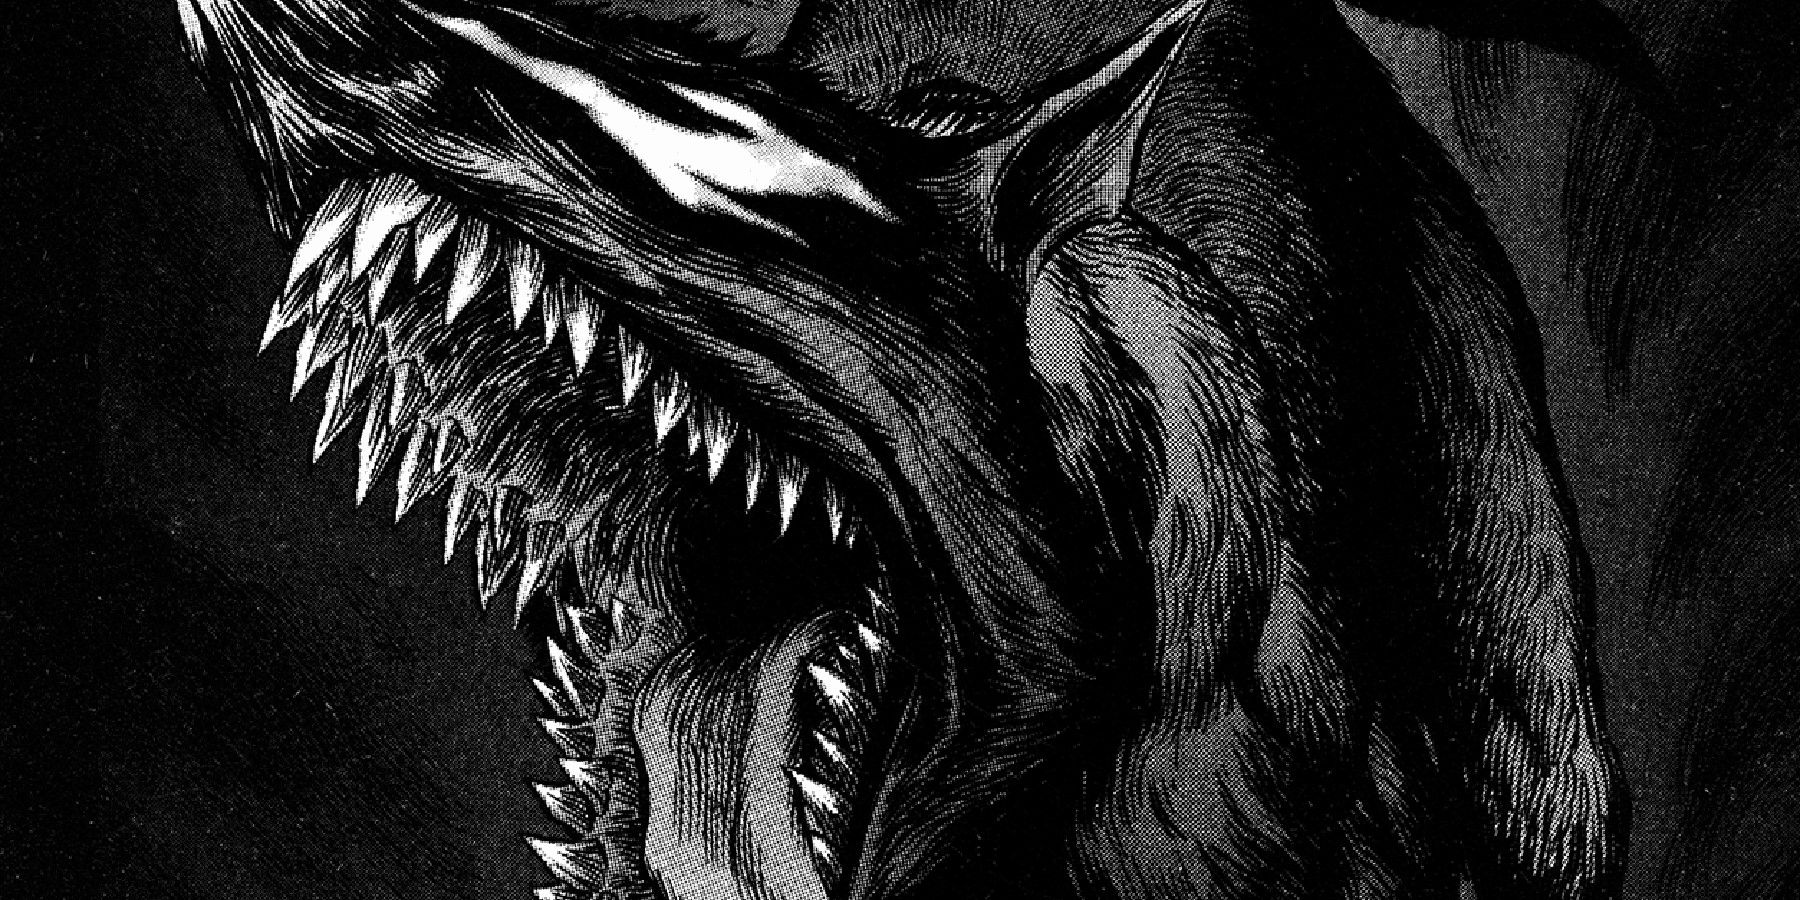 Berserk: The Beast of Darkness, Explained